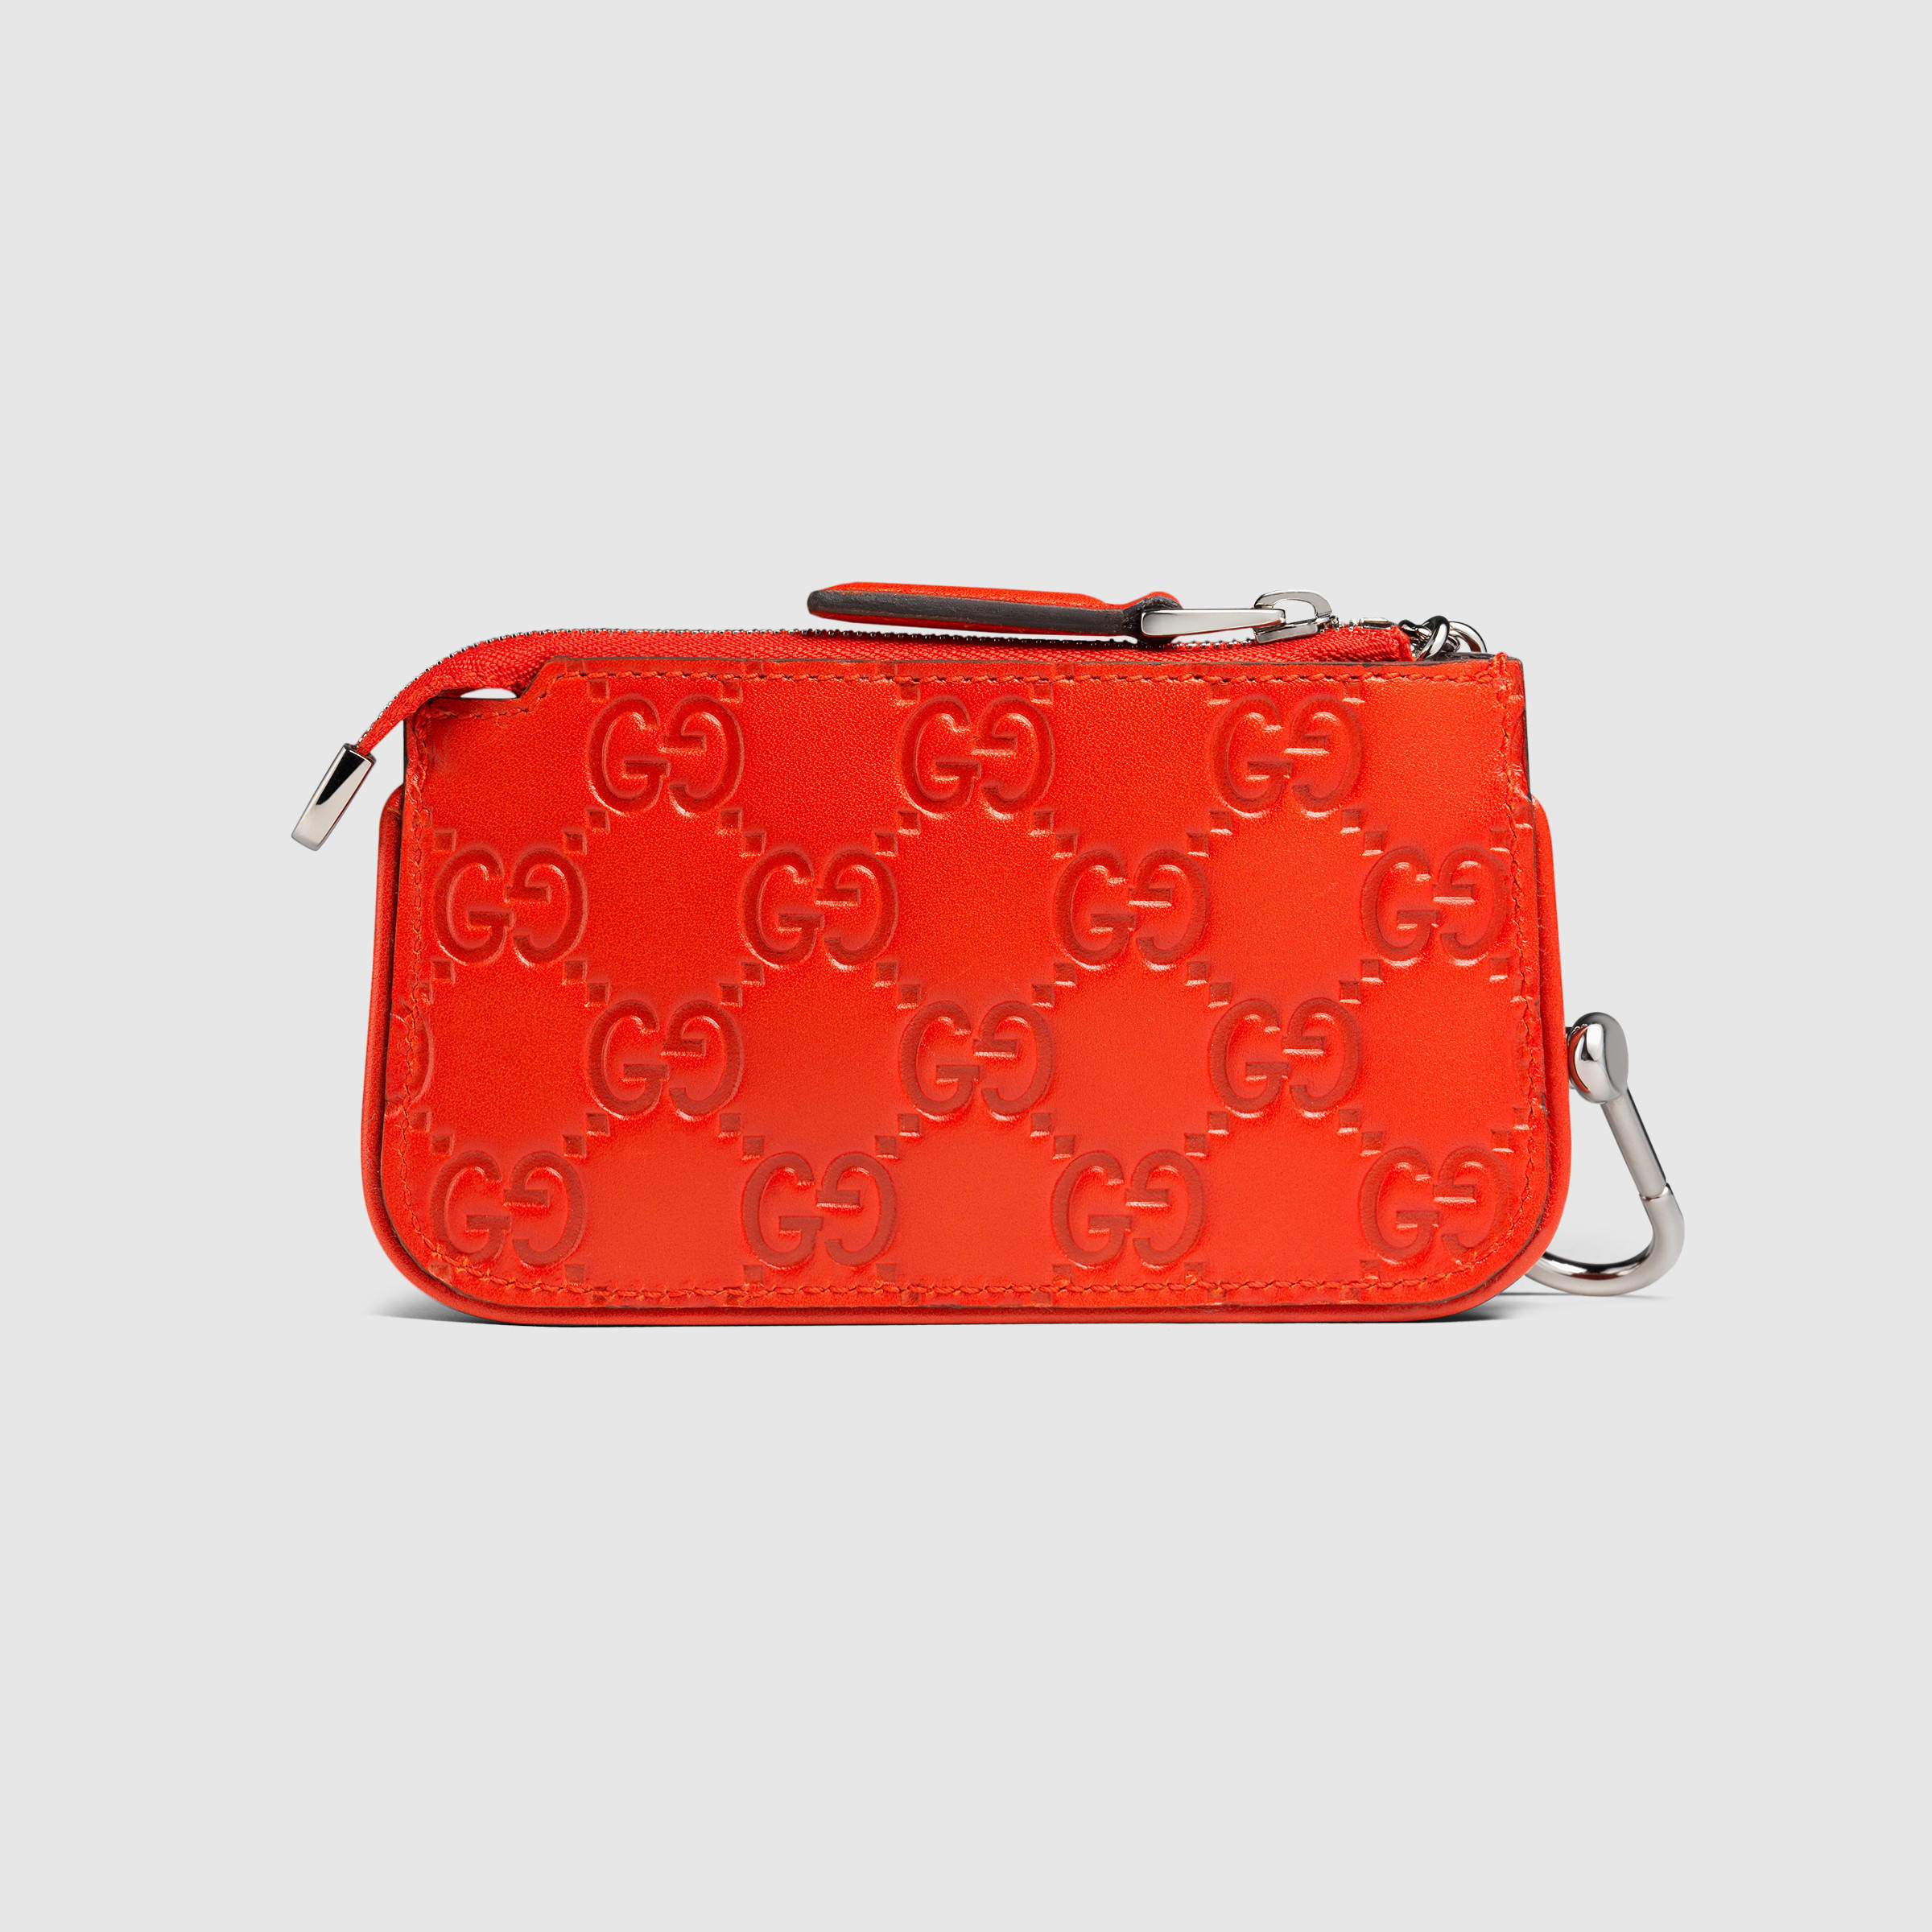 Lyst - Gucci Signature Leather Key Case in Orange